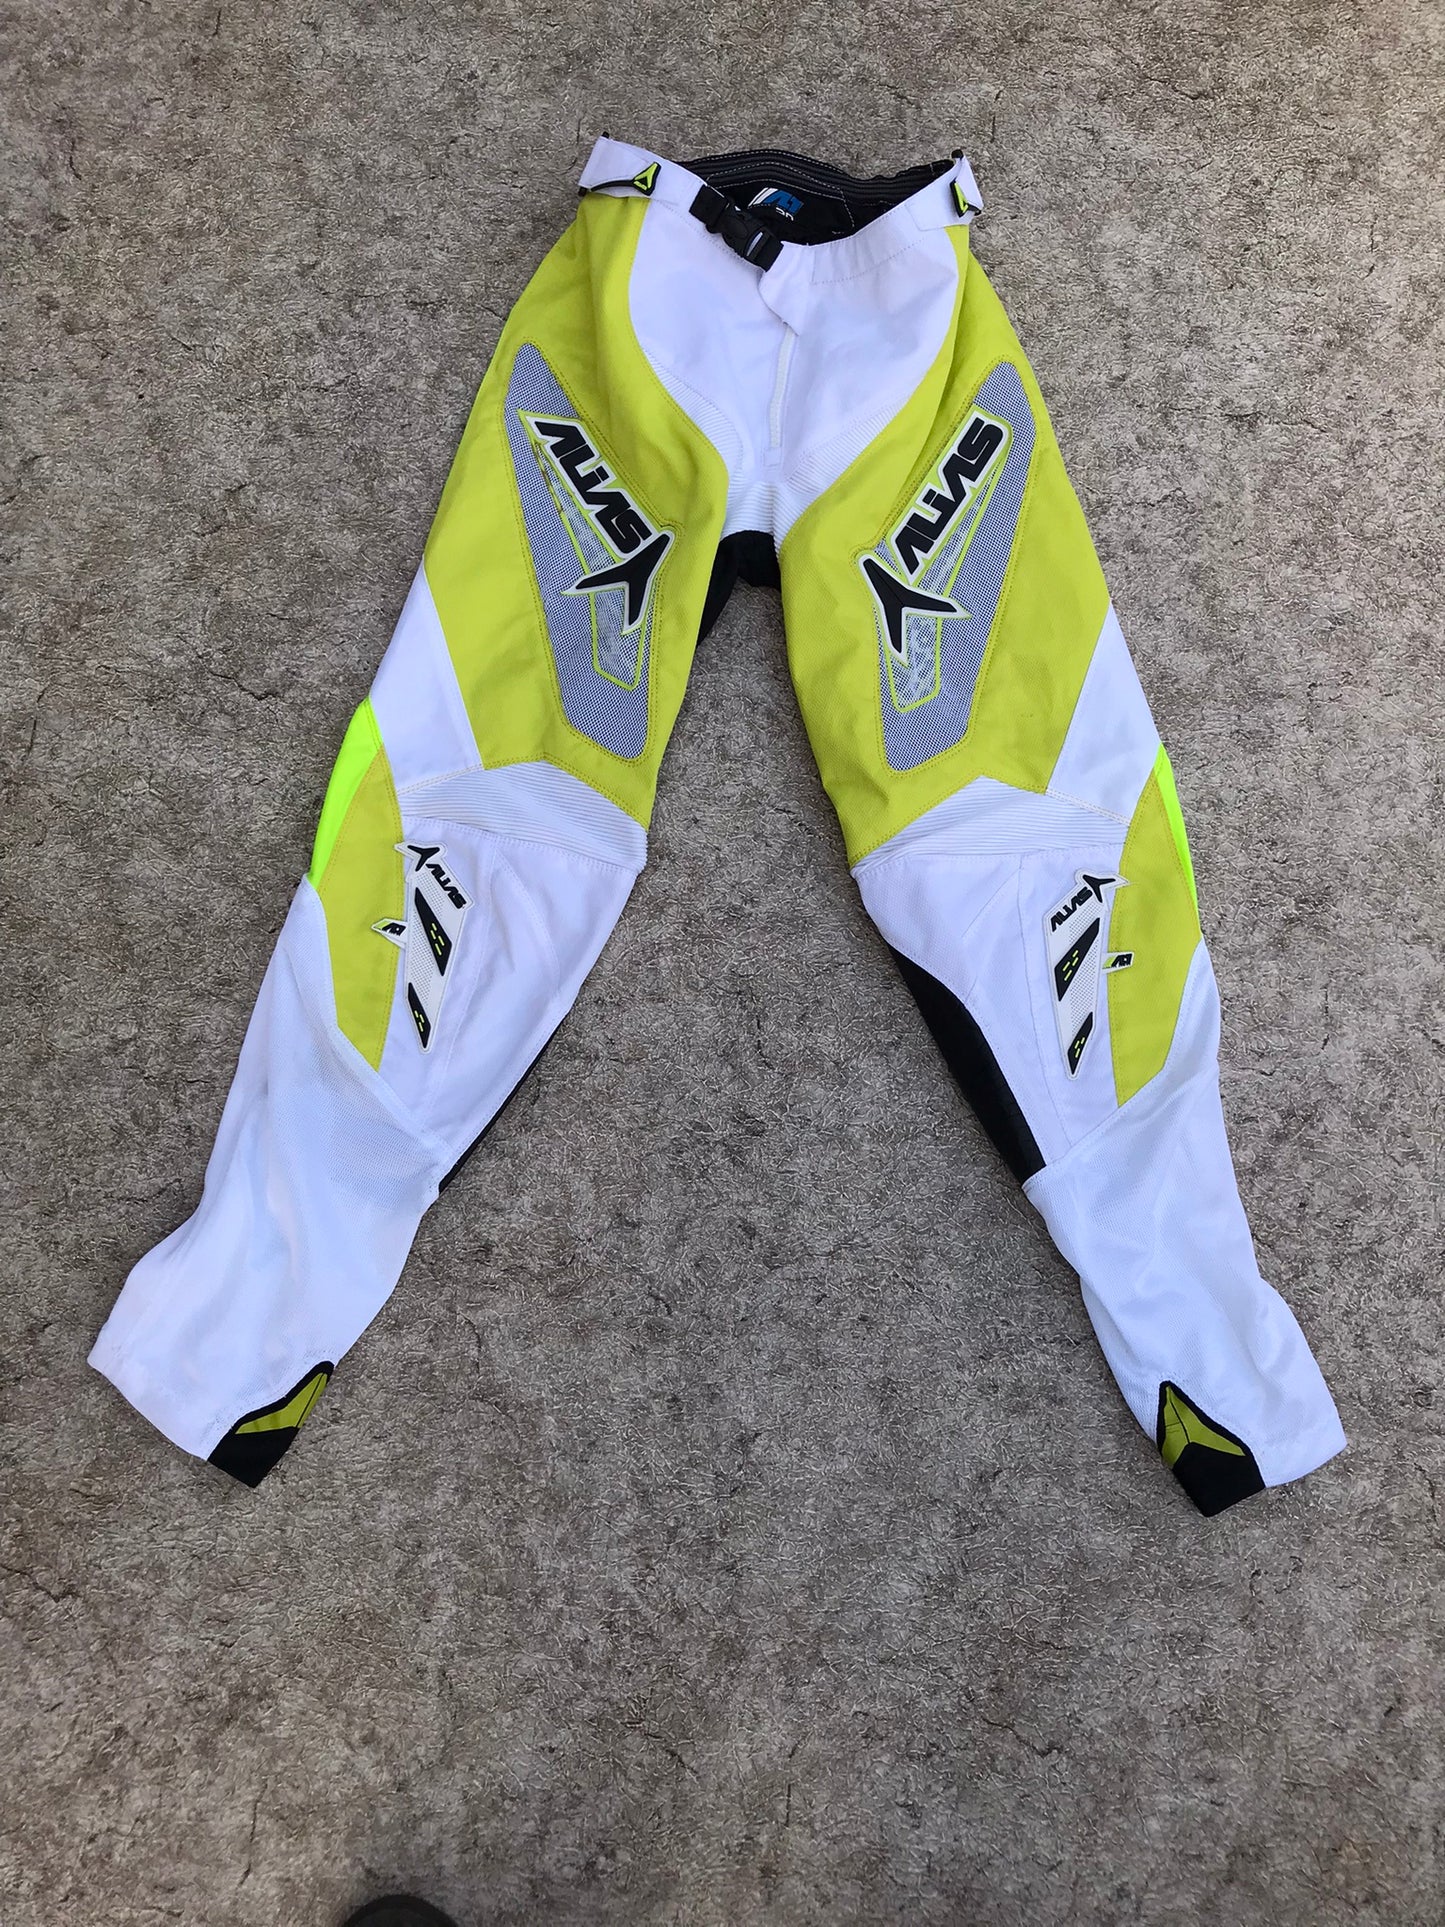 Motocross BMX Dirt Bike Pants Men's Size 30 inch Small Alias Lime White Black Excellent